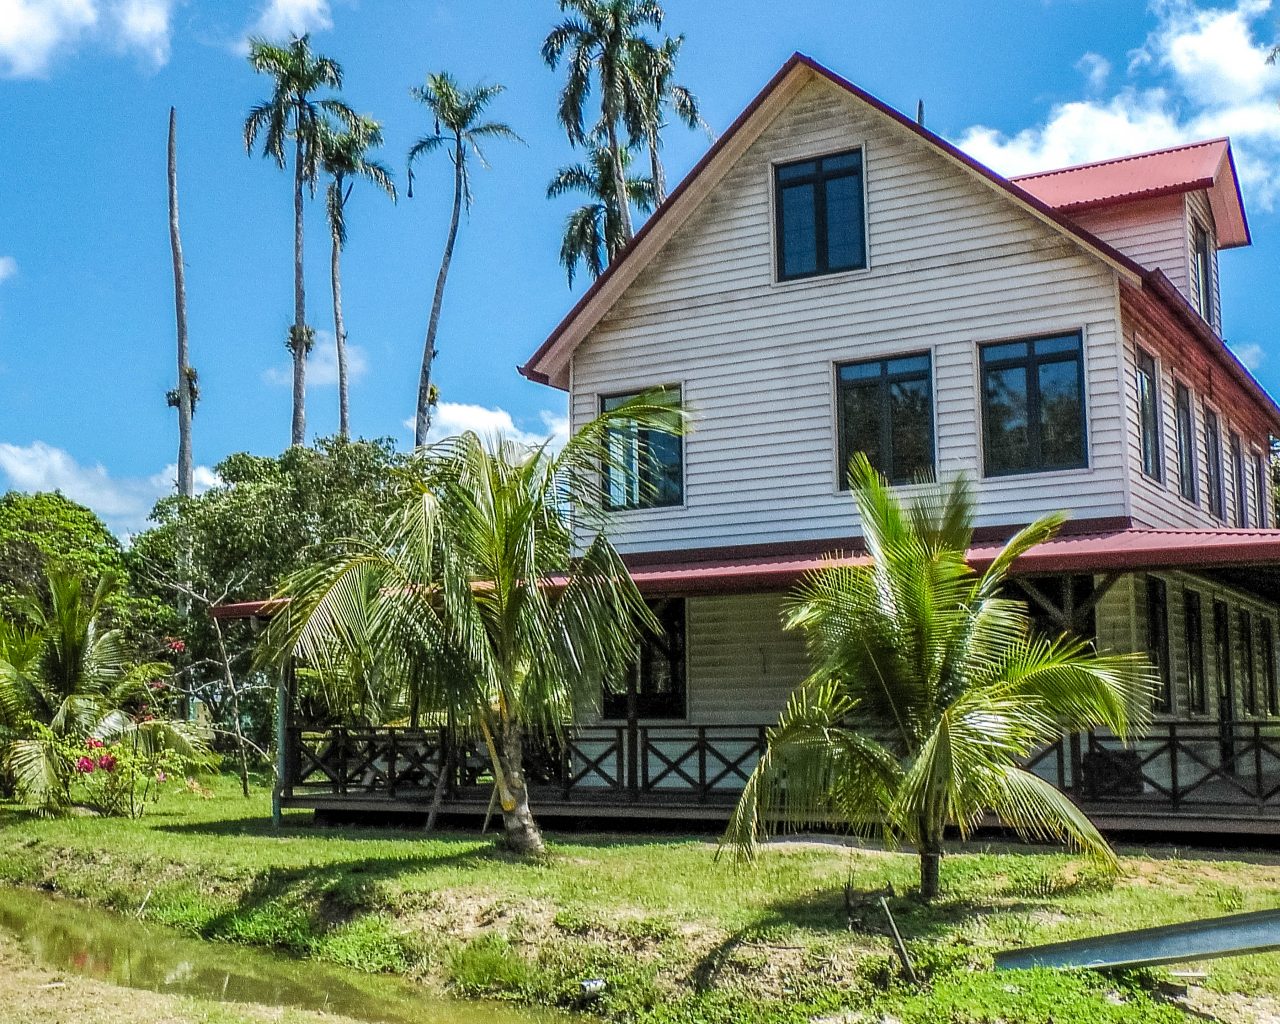 Paramaribo-Suriname